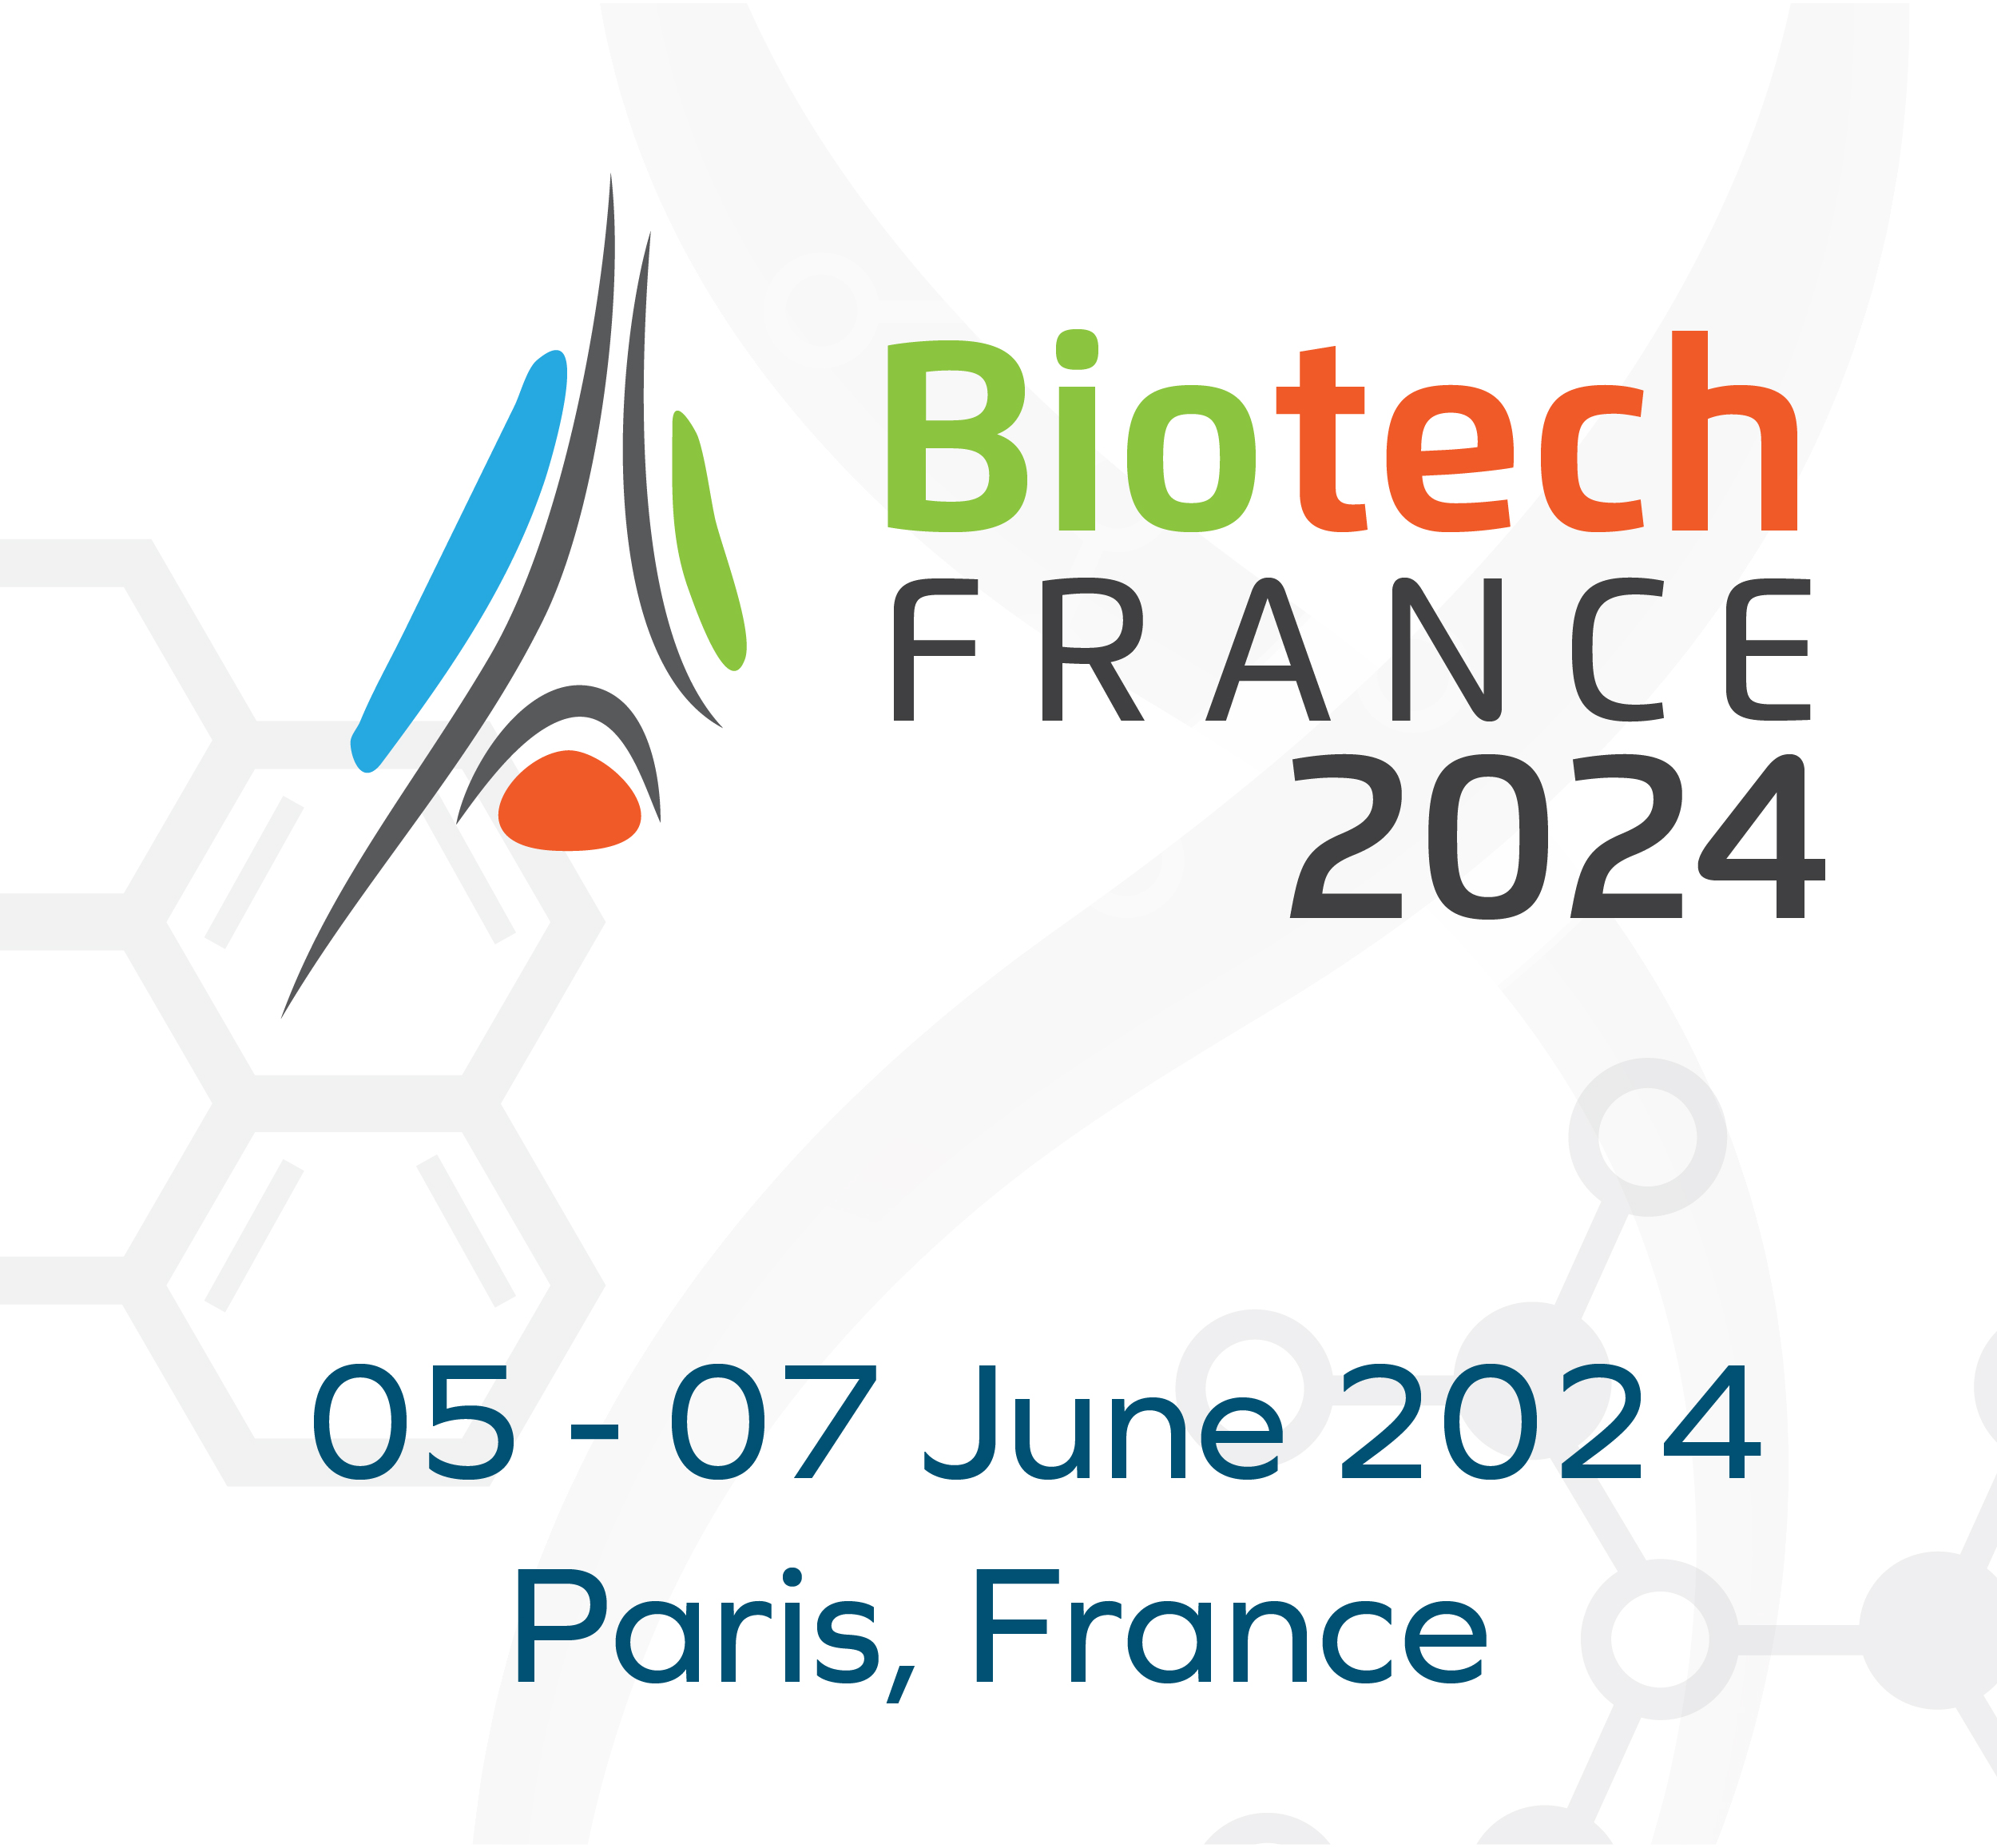 Biotech France 2024 international conference, 05 - 07 June 2024, Paris, France